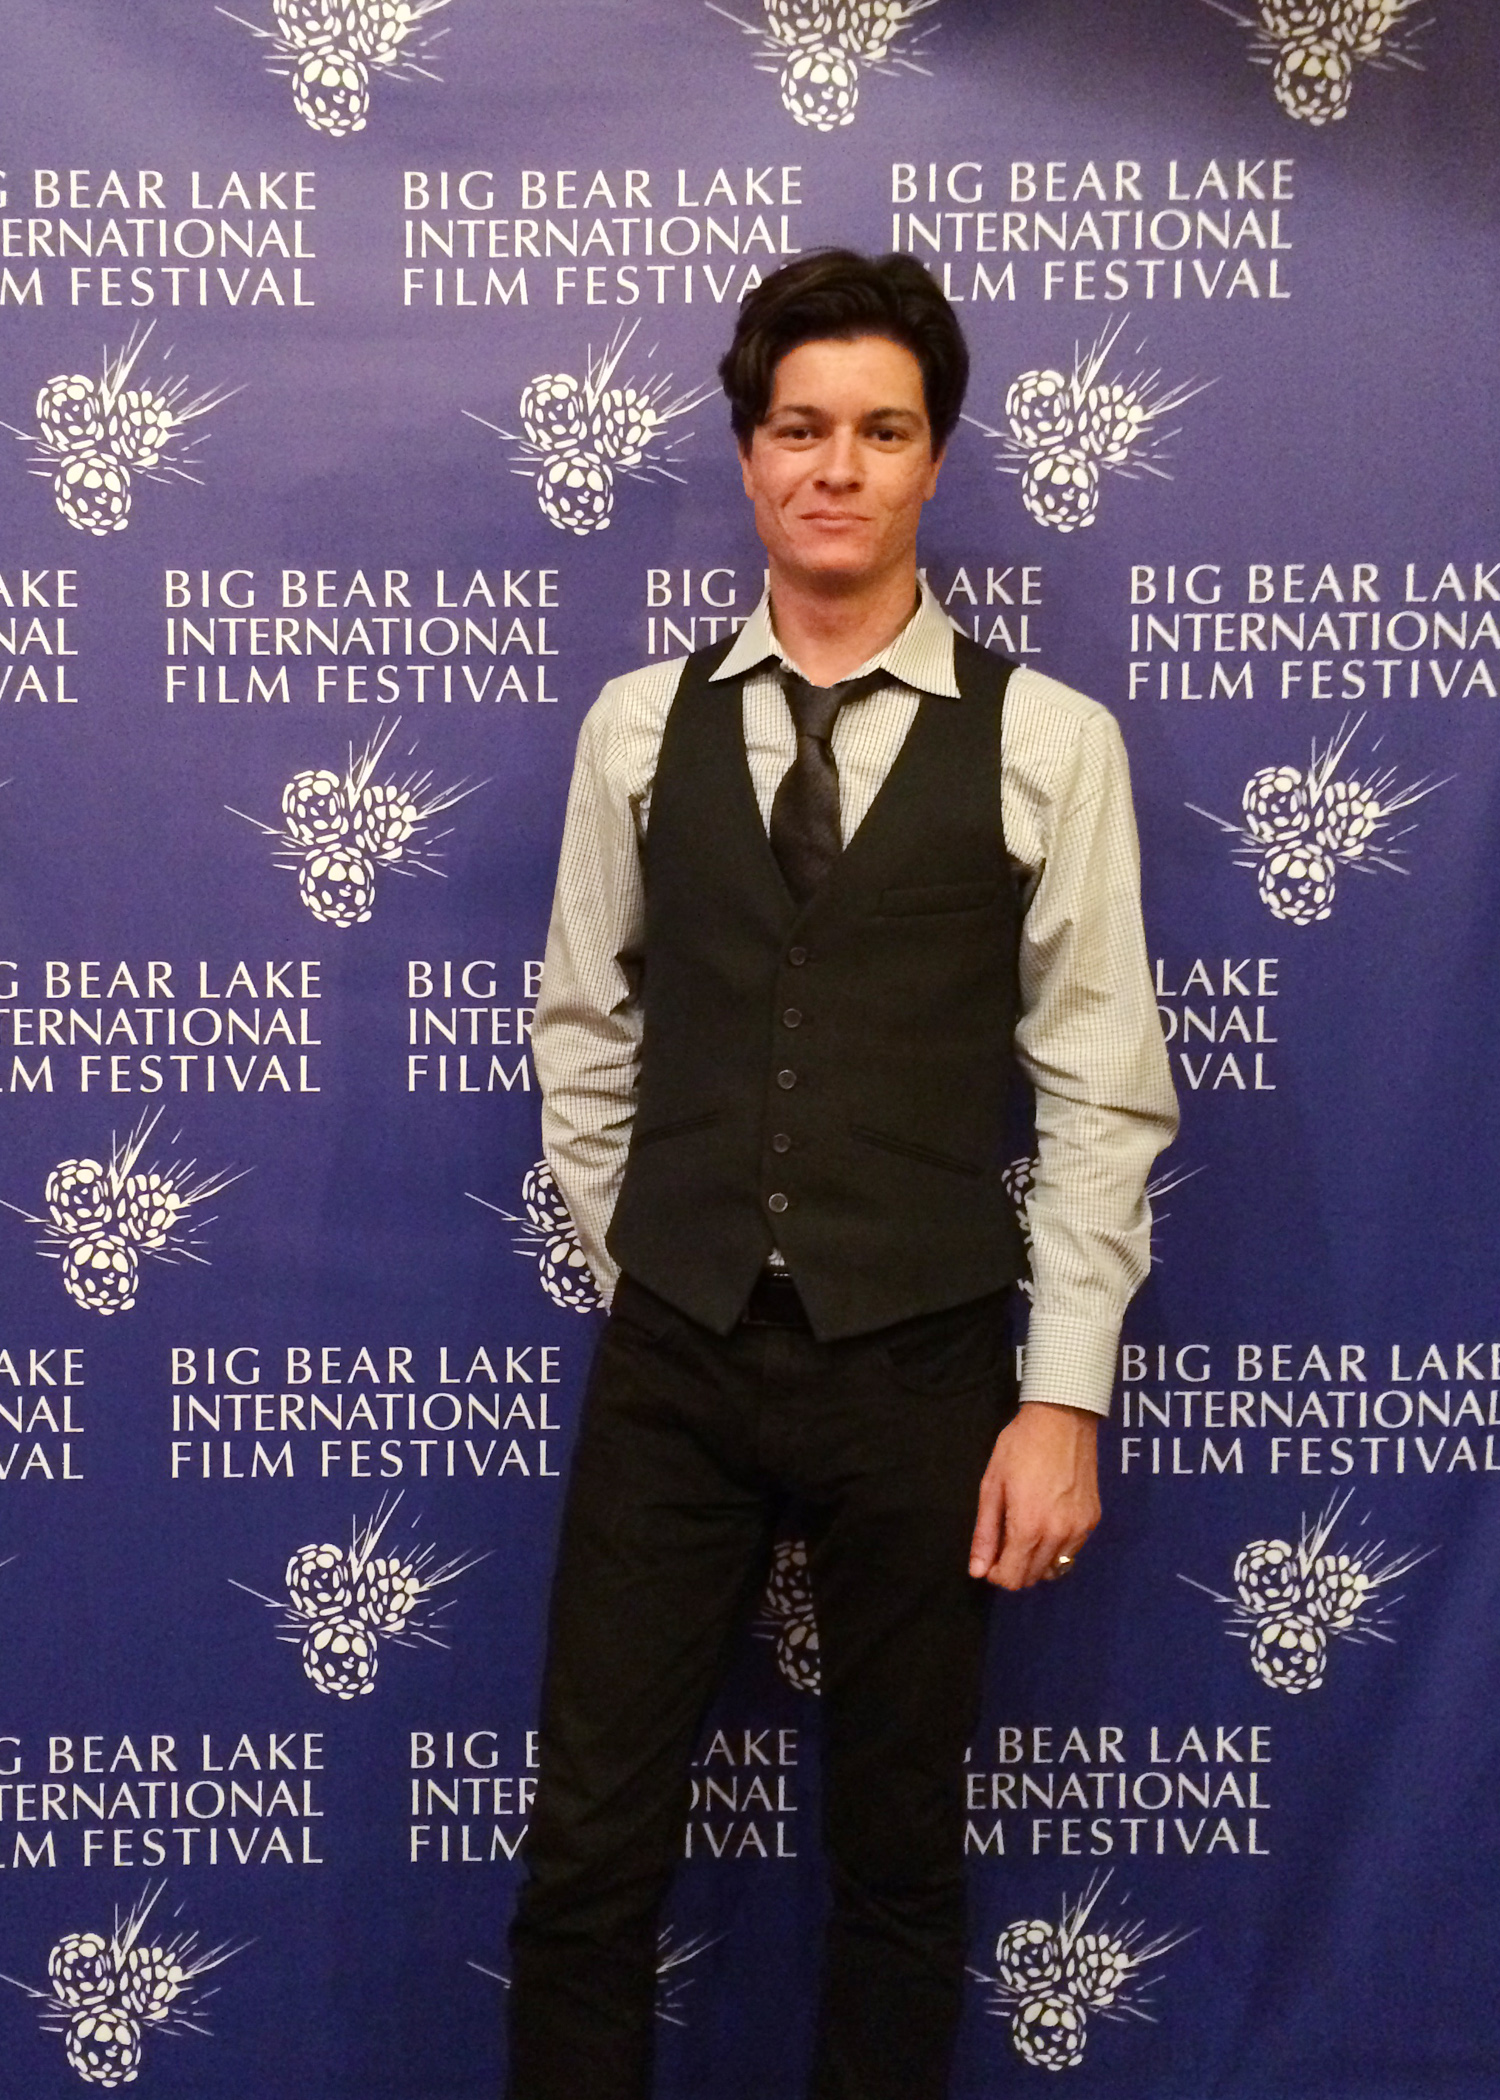 Nicolas Wendl at event 15th Annual Big Bear Lake International Film Festival.